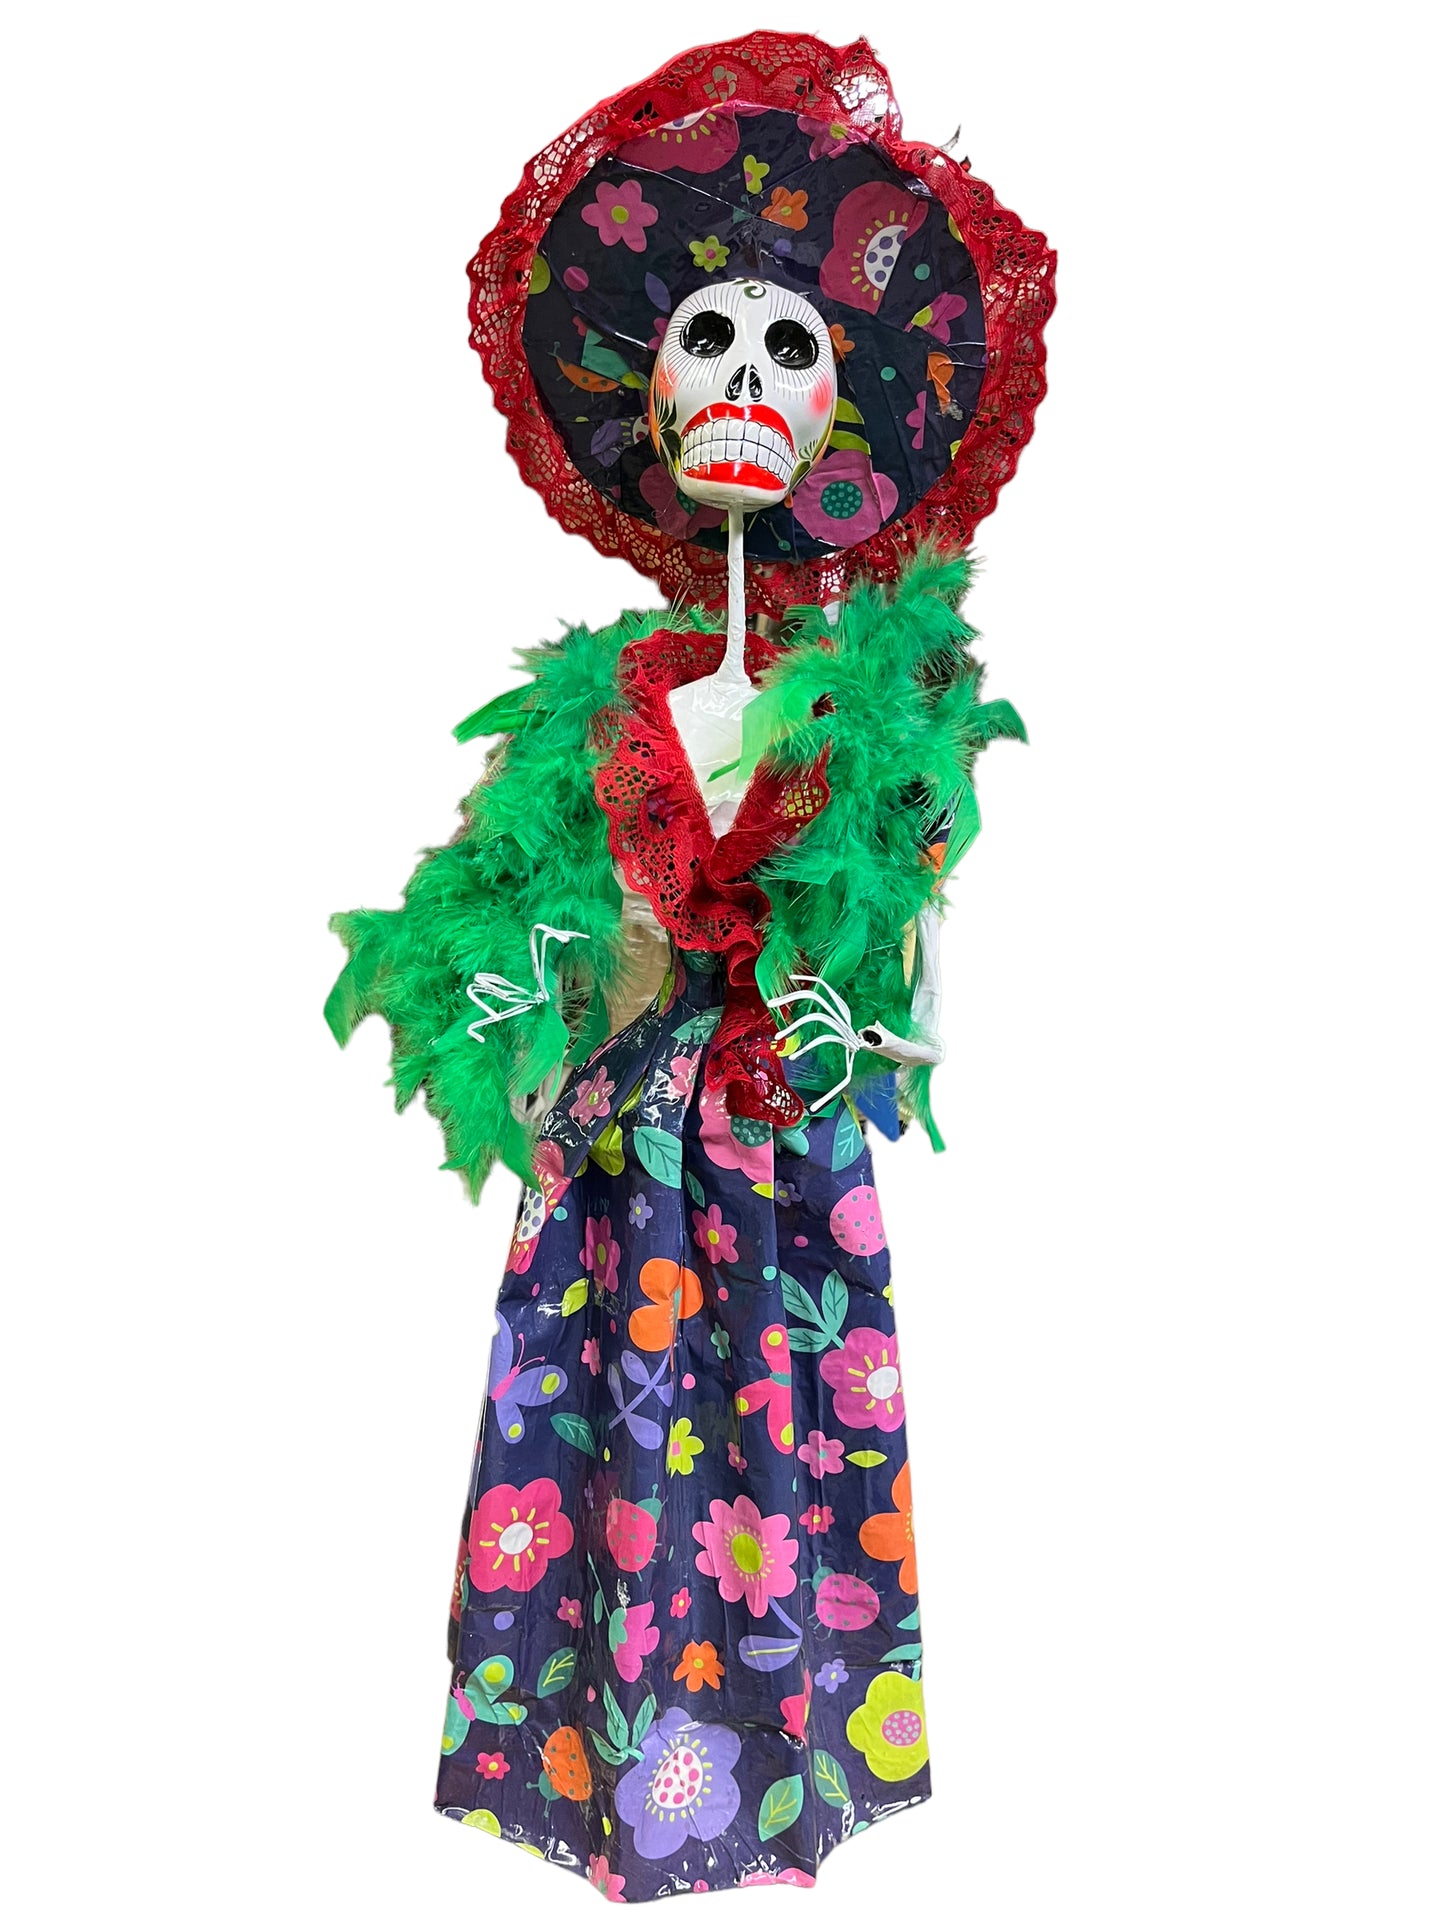 Paper Mache Mexican Catrina Doll three